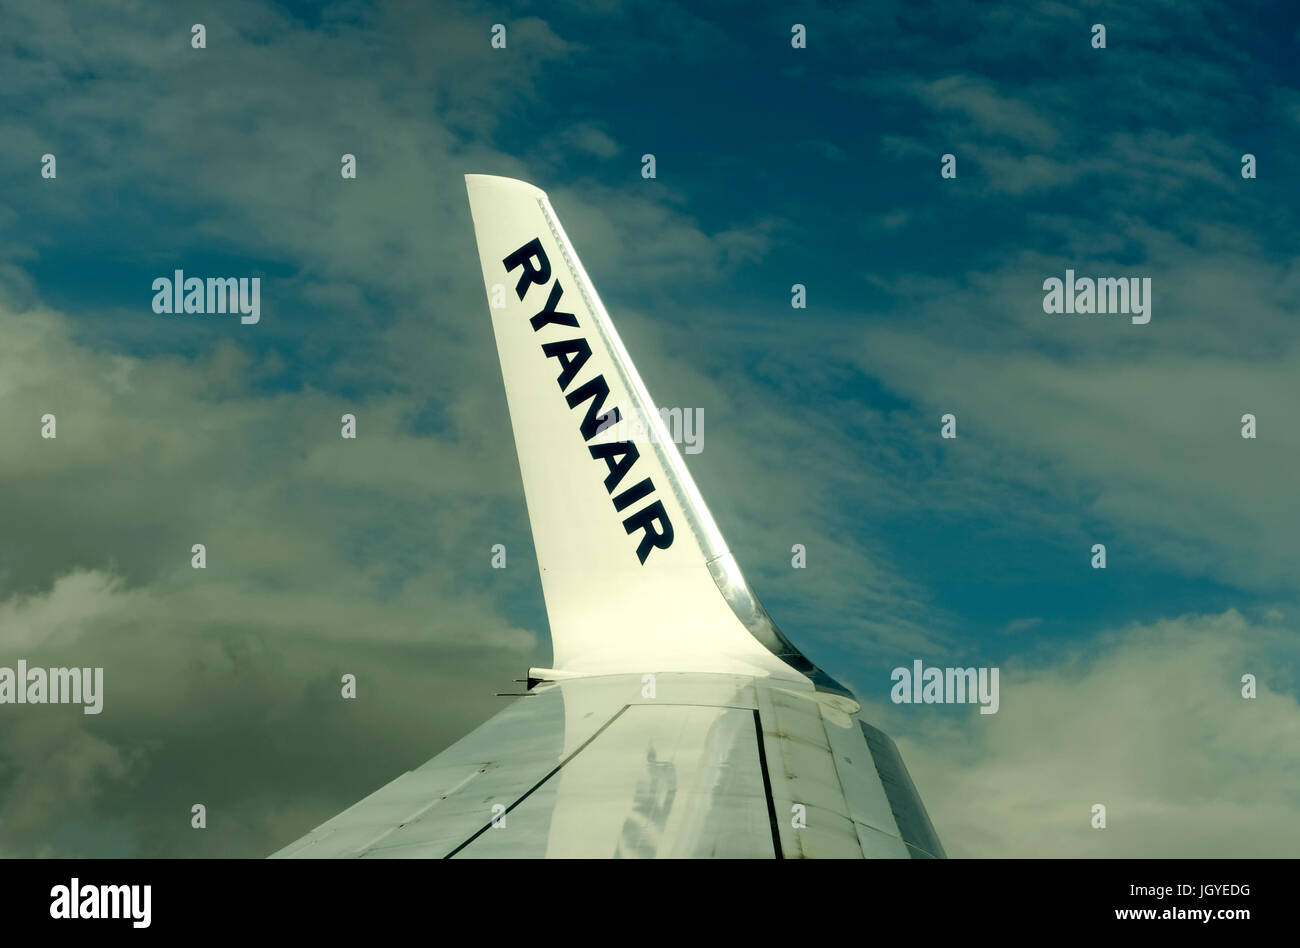 RYAN AIR WING IN FLIGHT Stock Photo